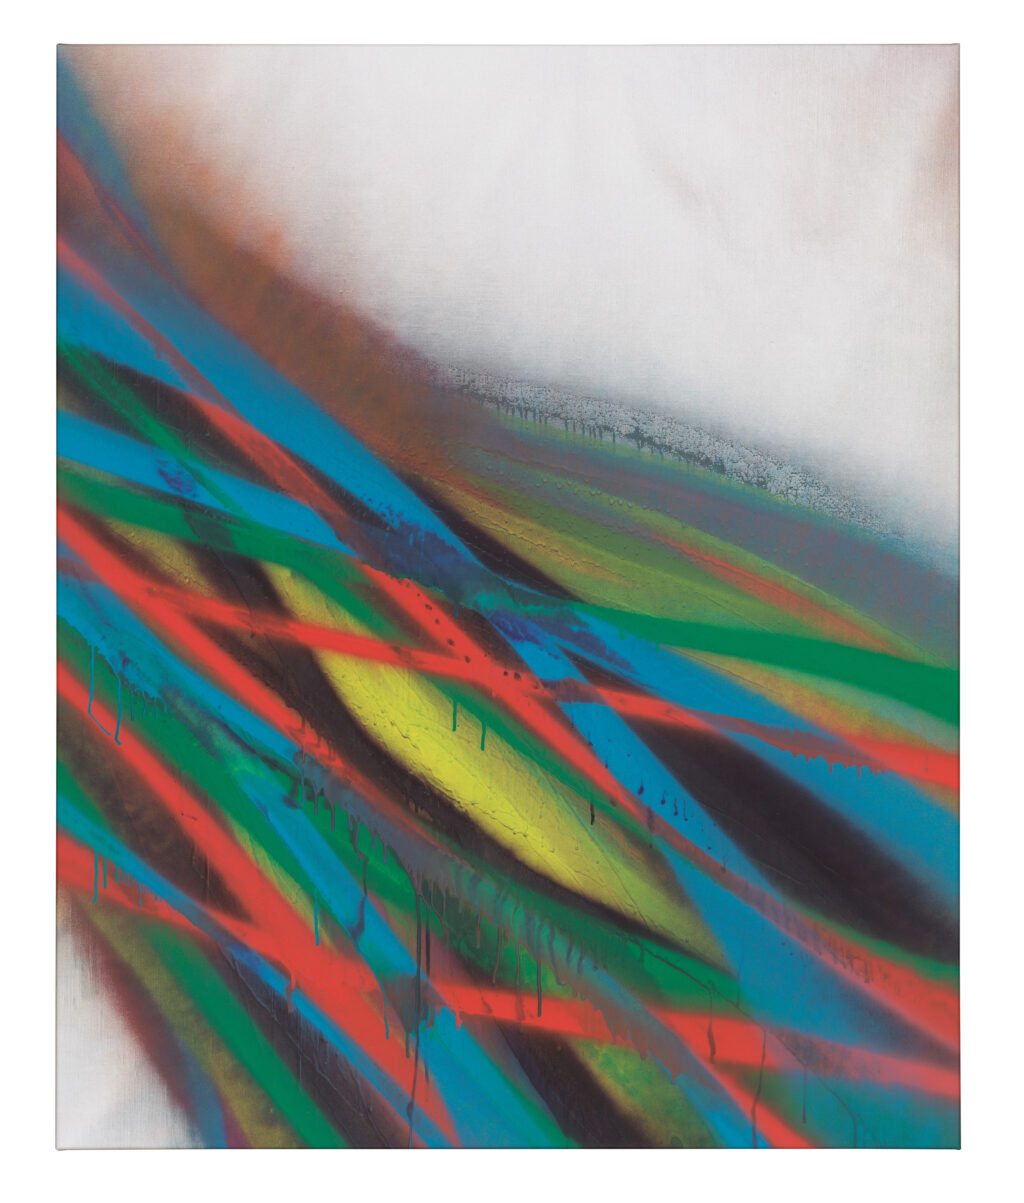 <p>MAX HETZLER</p>
<p> </p>
<p>Katharina Grosse, Untitled, 2022, © Katharina Grosse and VG Bild-Kunst, Bonn, 2023, Courtesy the artist and Galerie Max Hetzler Berlin | Paris | London, Photo: Jens Ziehe</p>
